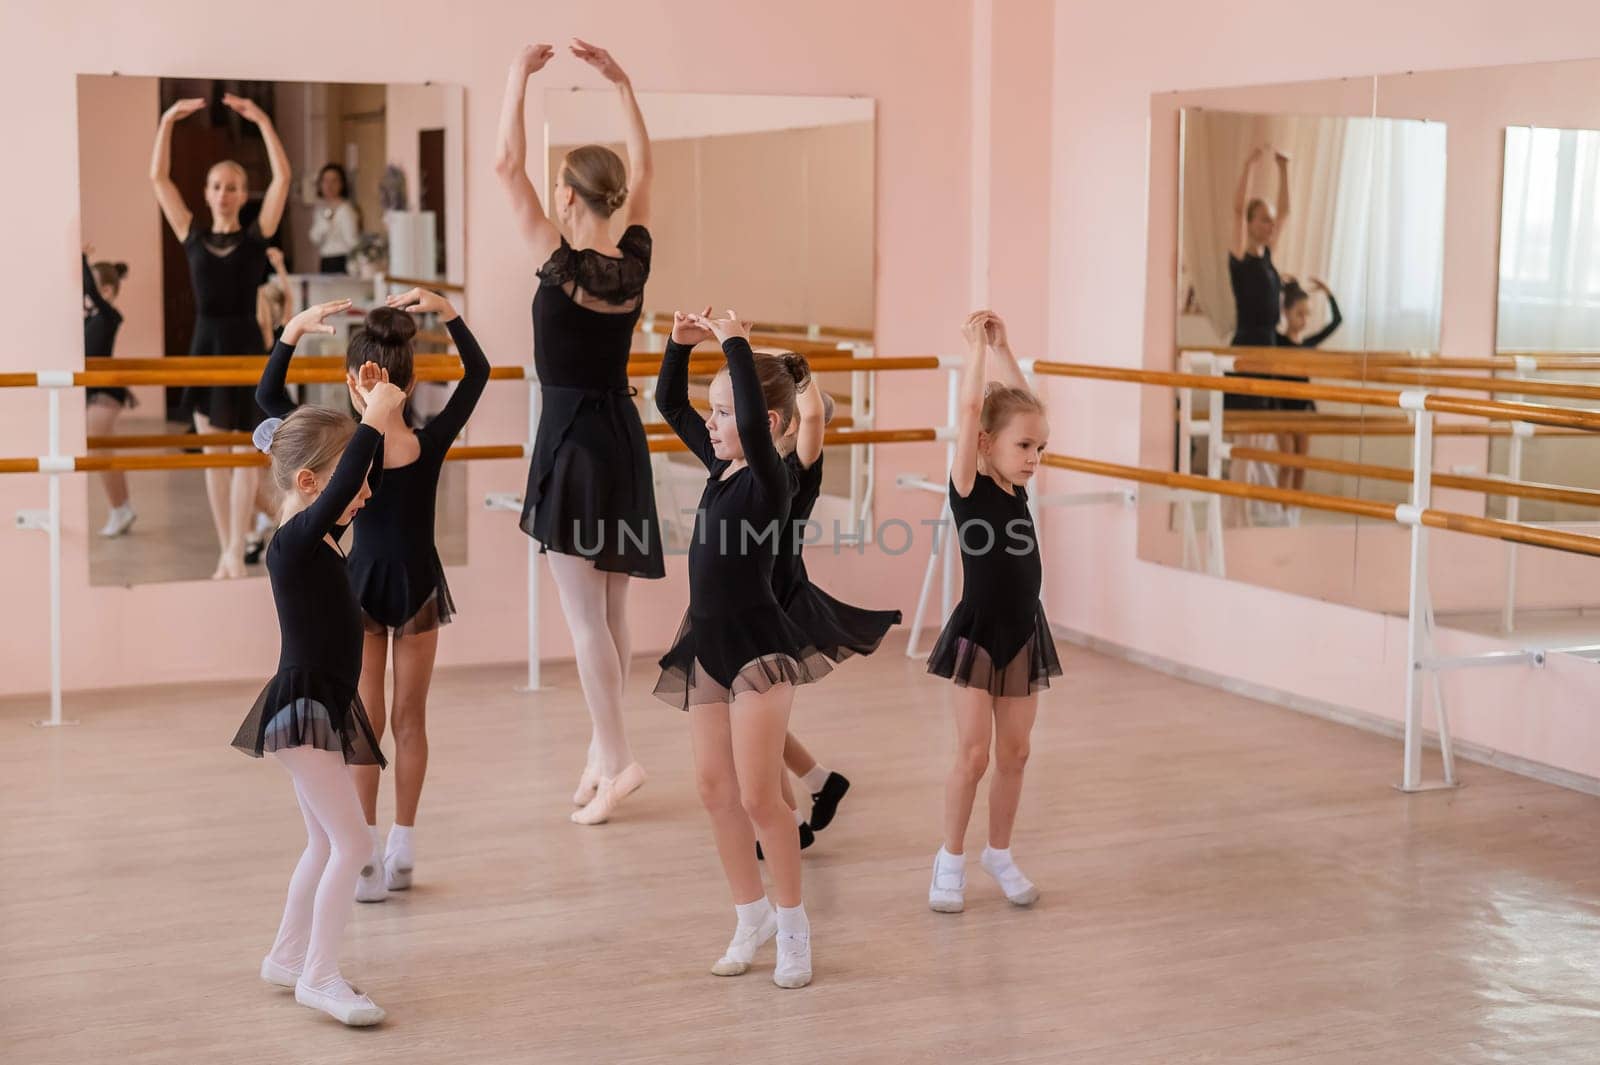 Children's ballet school. Caucasian woman teaching ballet to little girls. by mrwed54